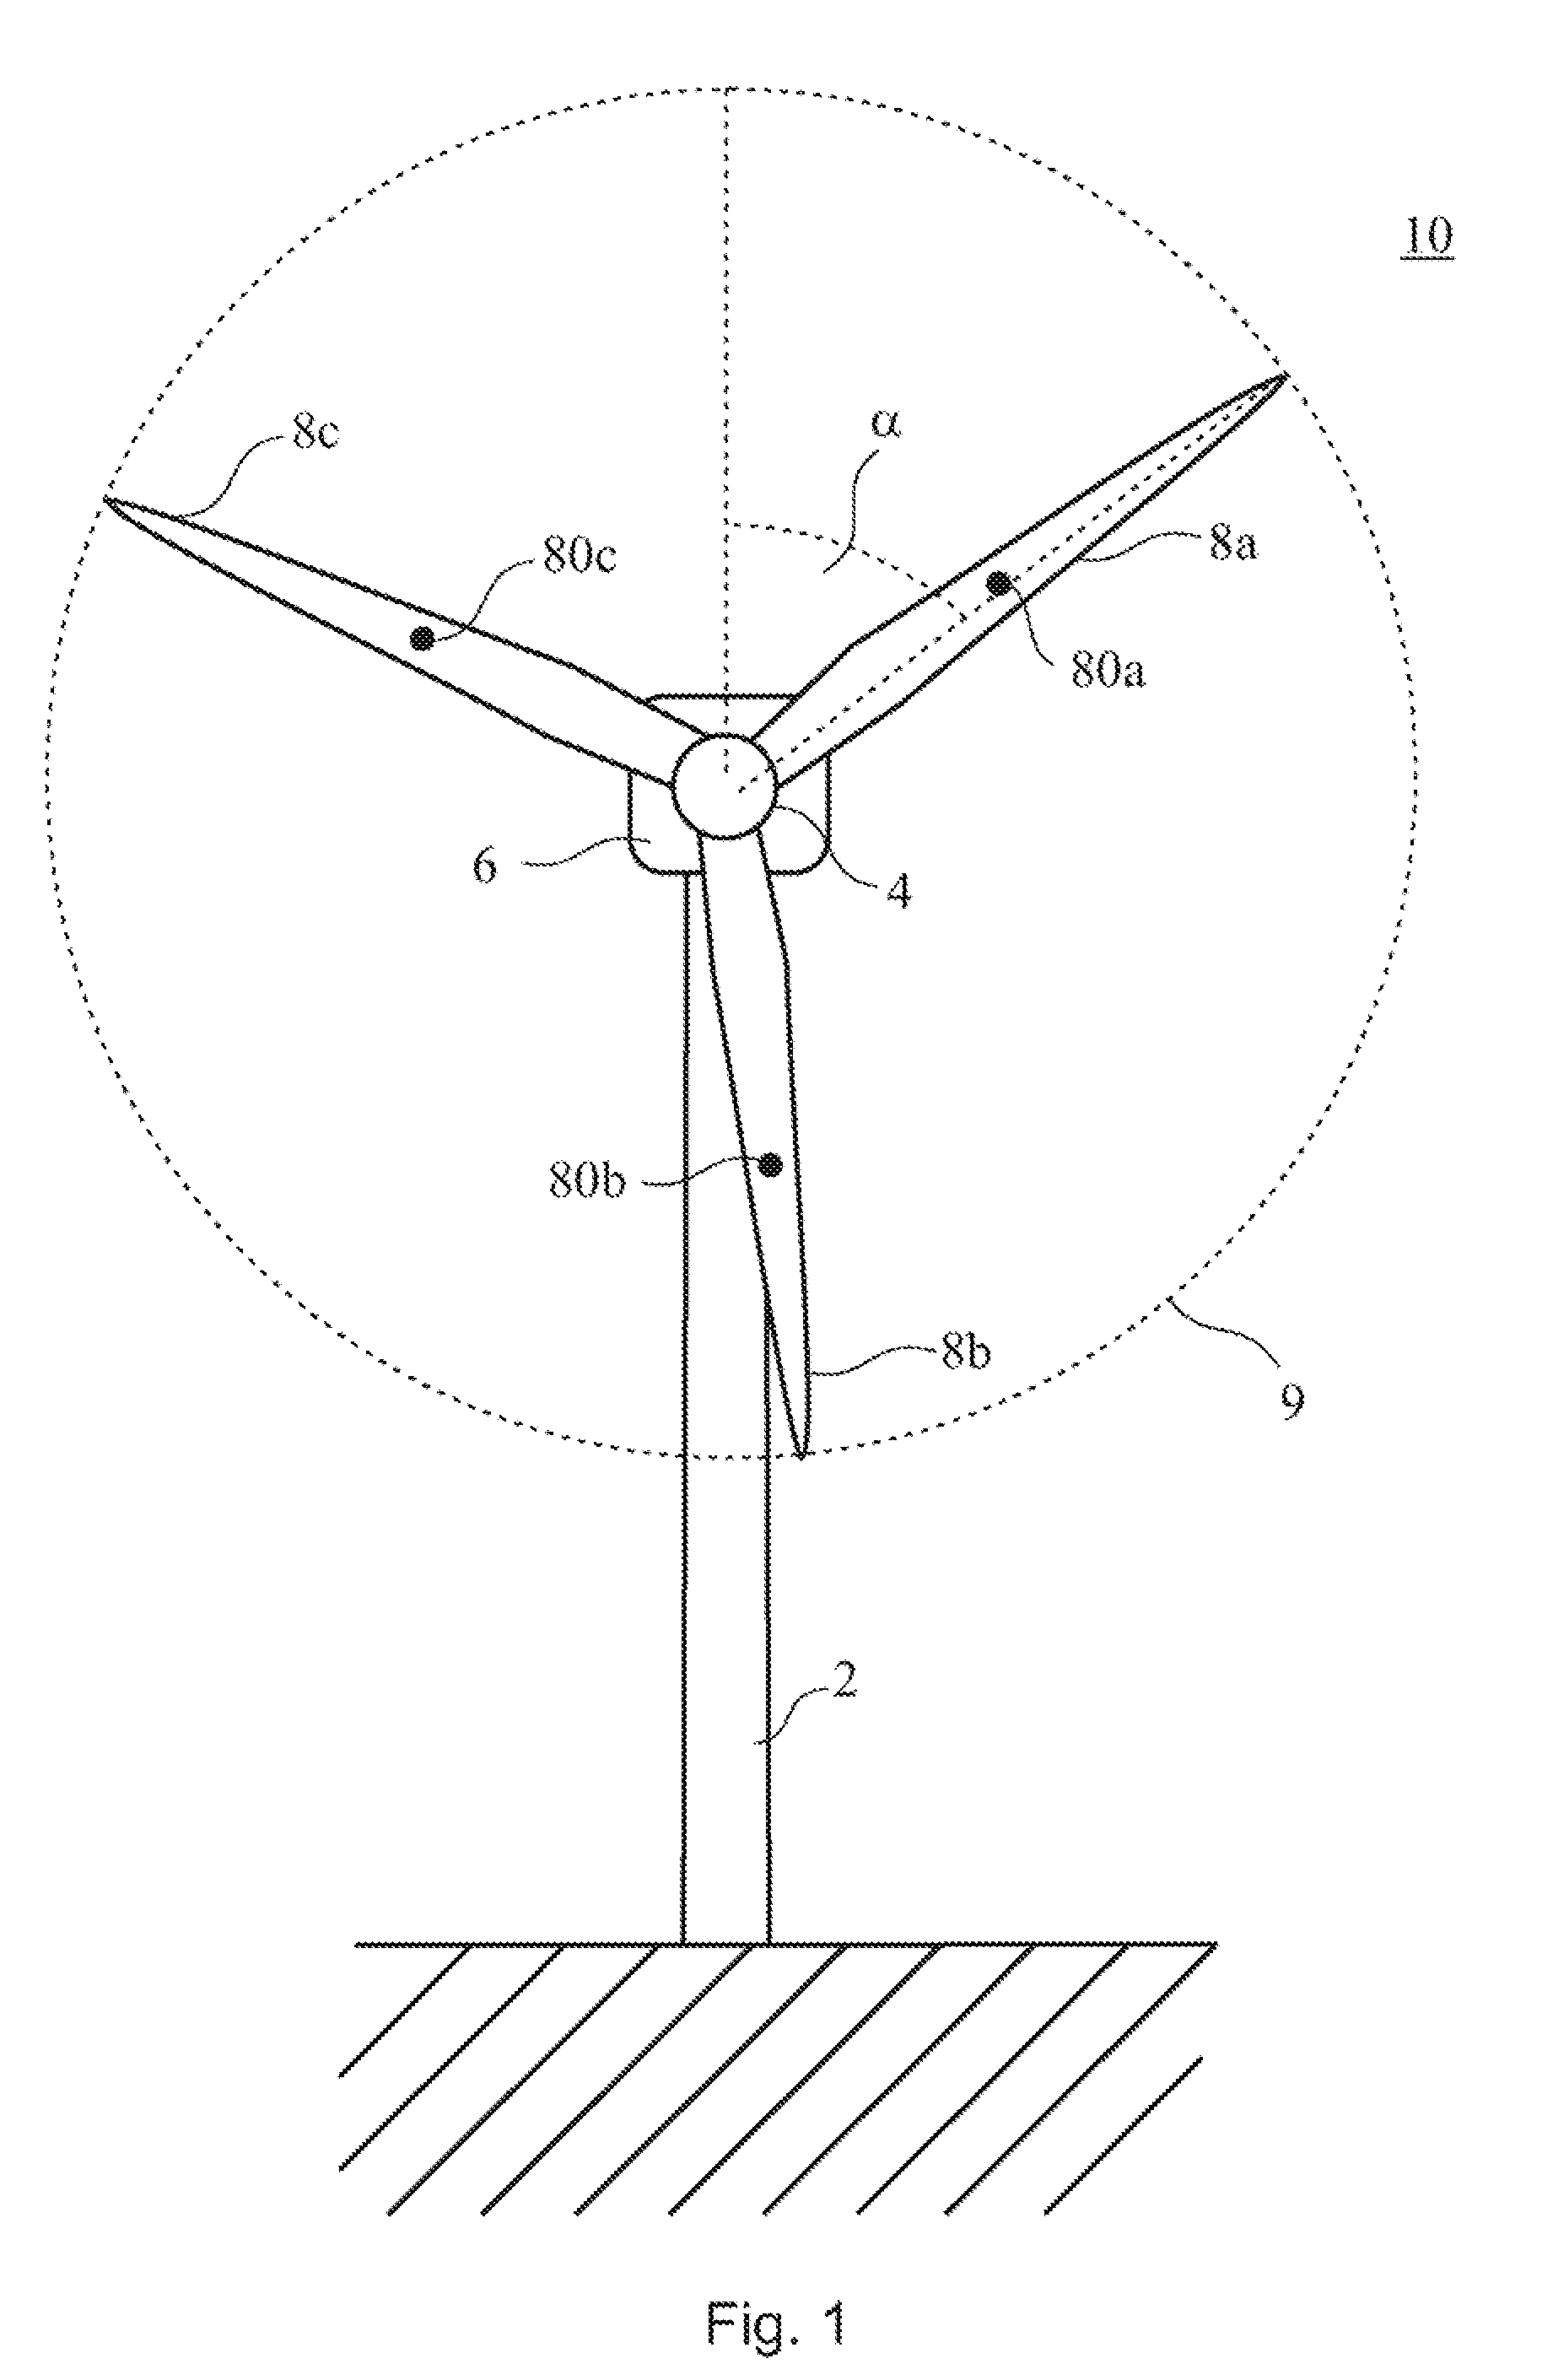 Wind turbine, wind turbine controller and method for controlling a wind turbine